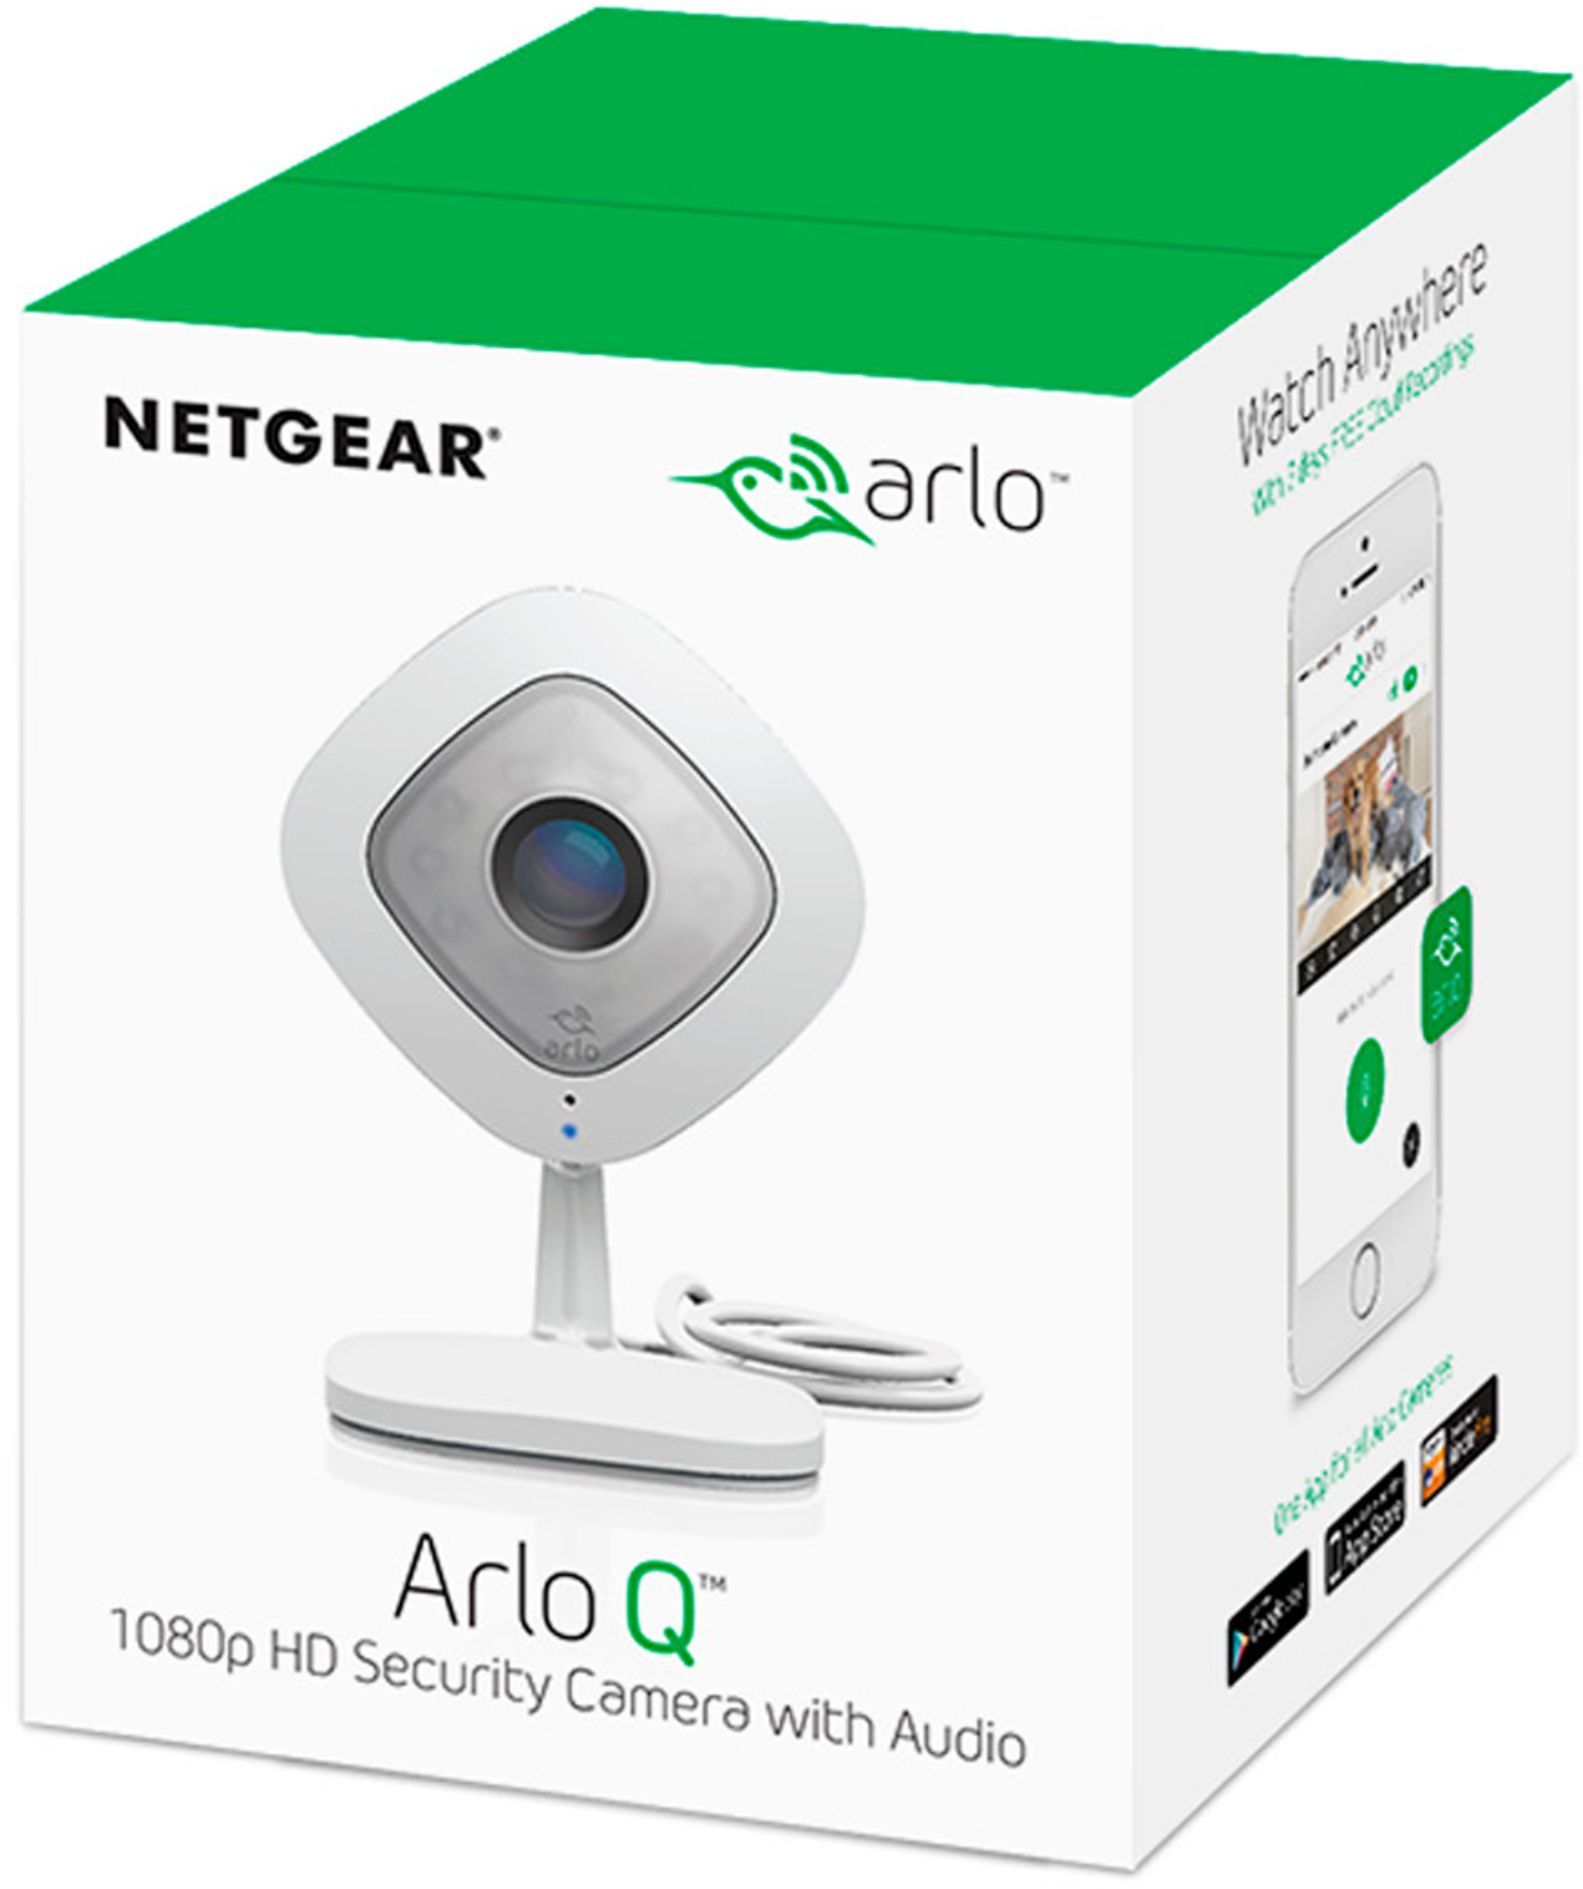 Best Buy: Q 1080p Security Camera White VMC3040-100NAS